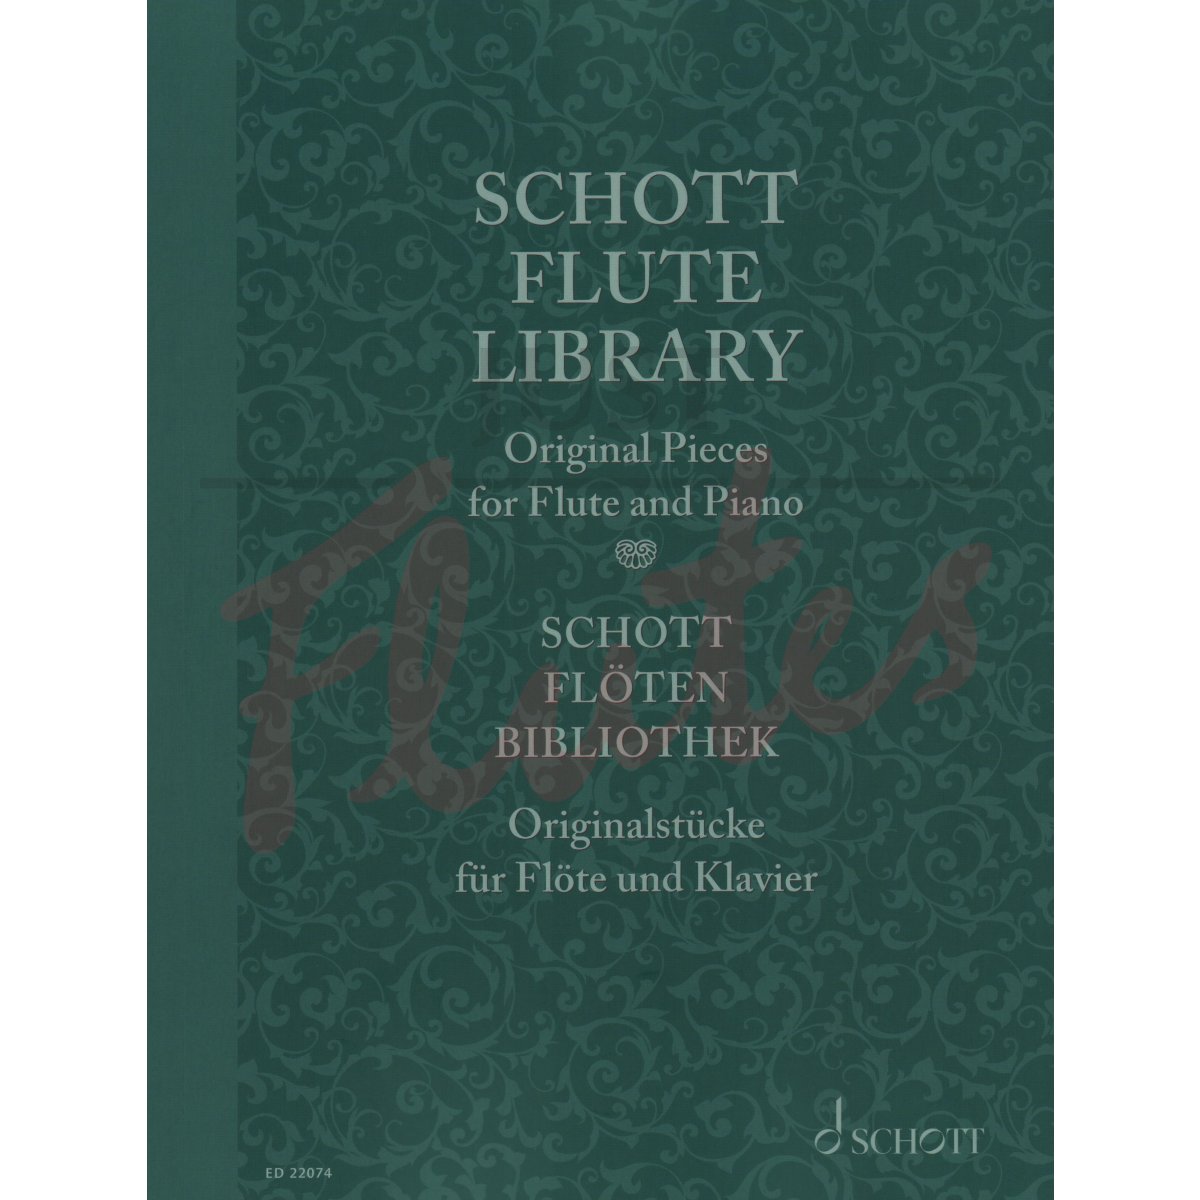 Schott Flute Library: Original Pieces for Flute and Piano